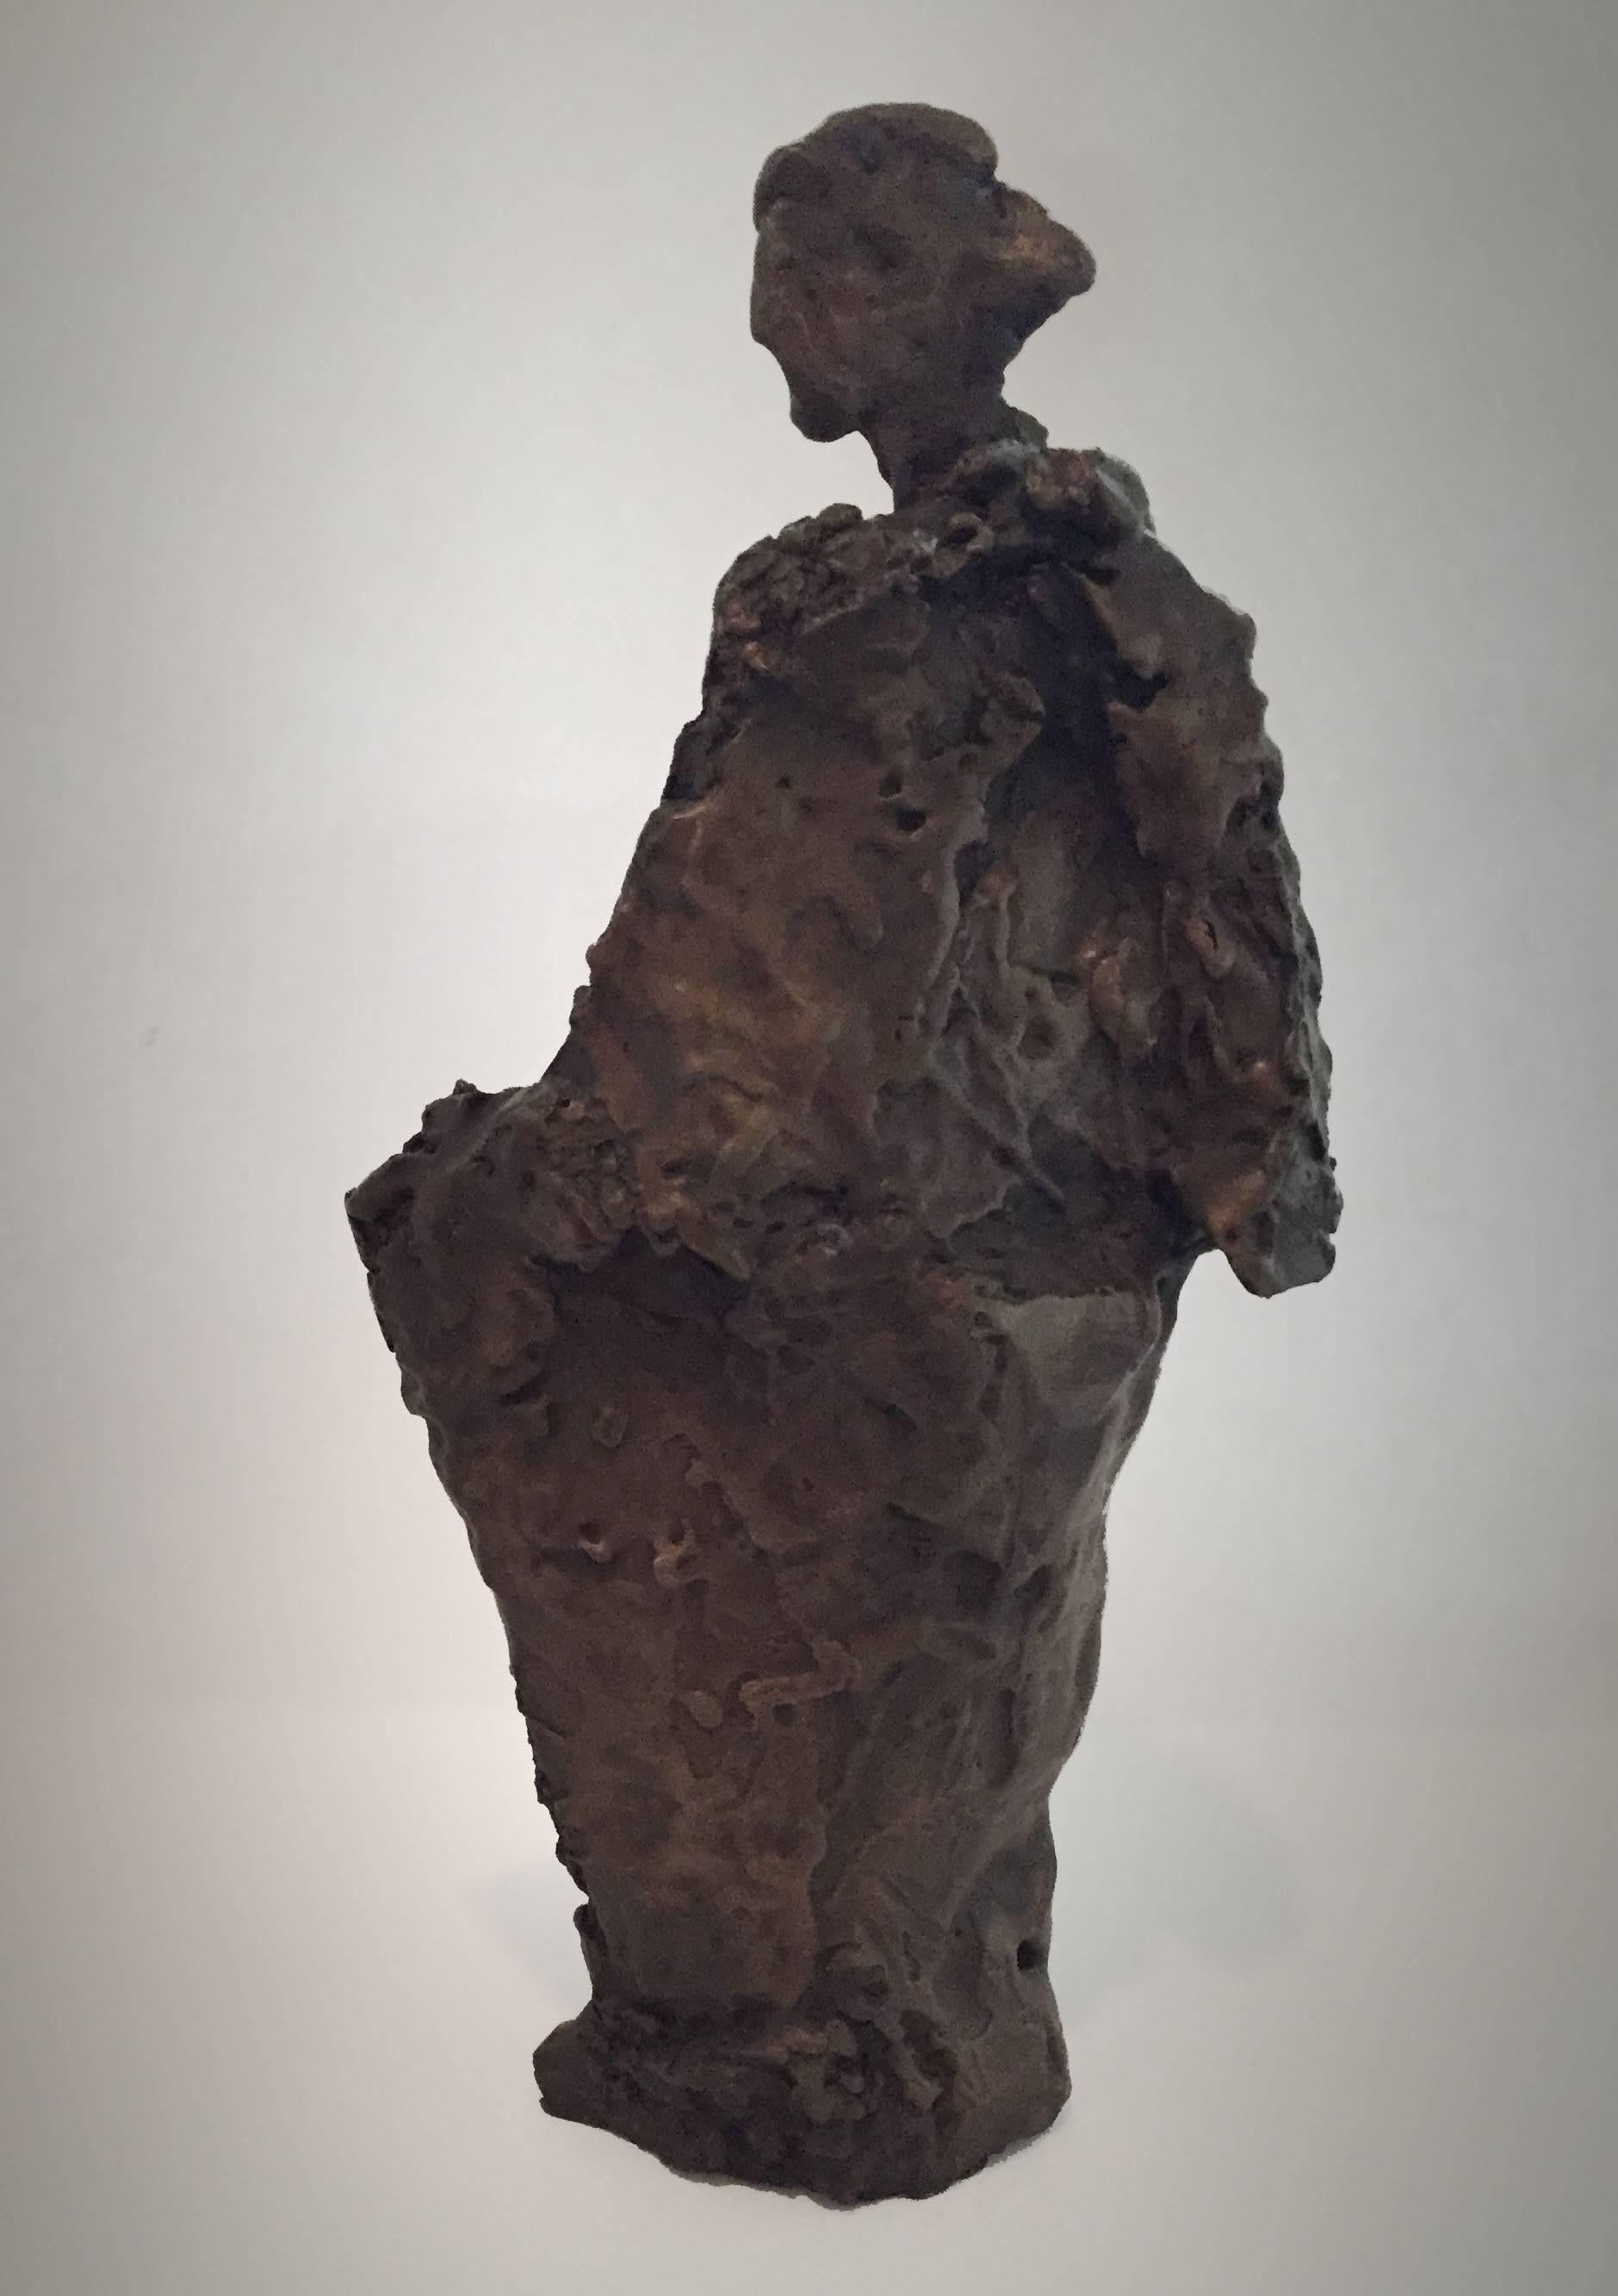 Bronze figurative sculpture
Unknown Israeli Artist